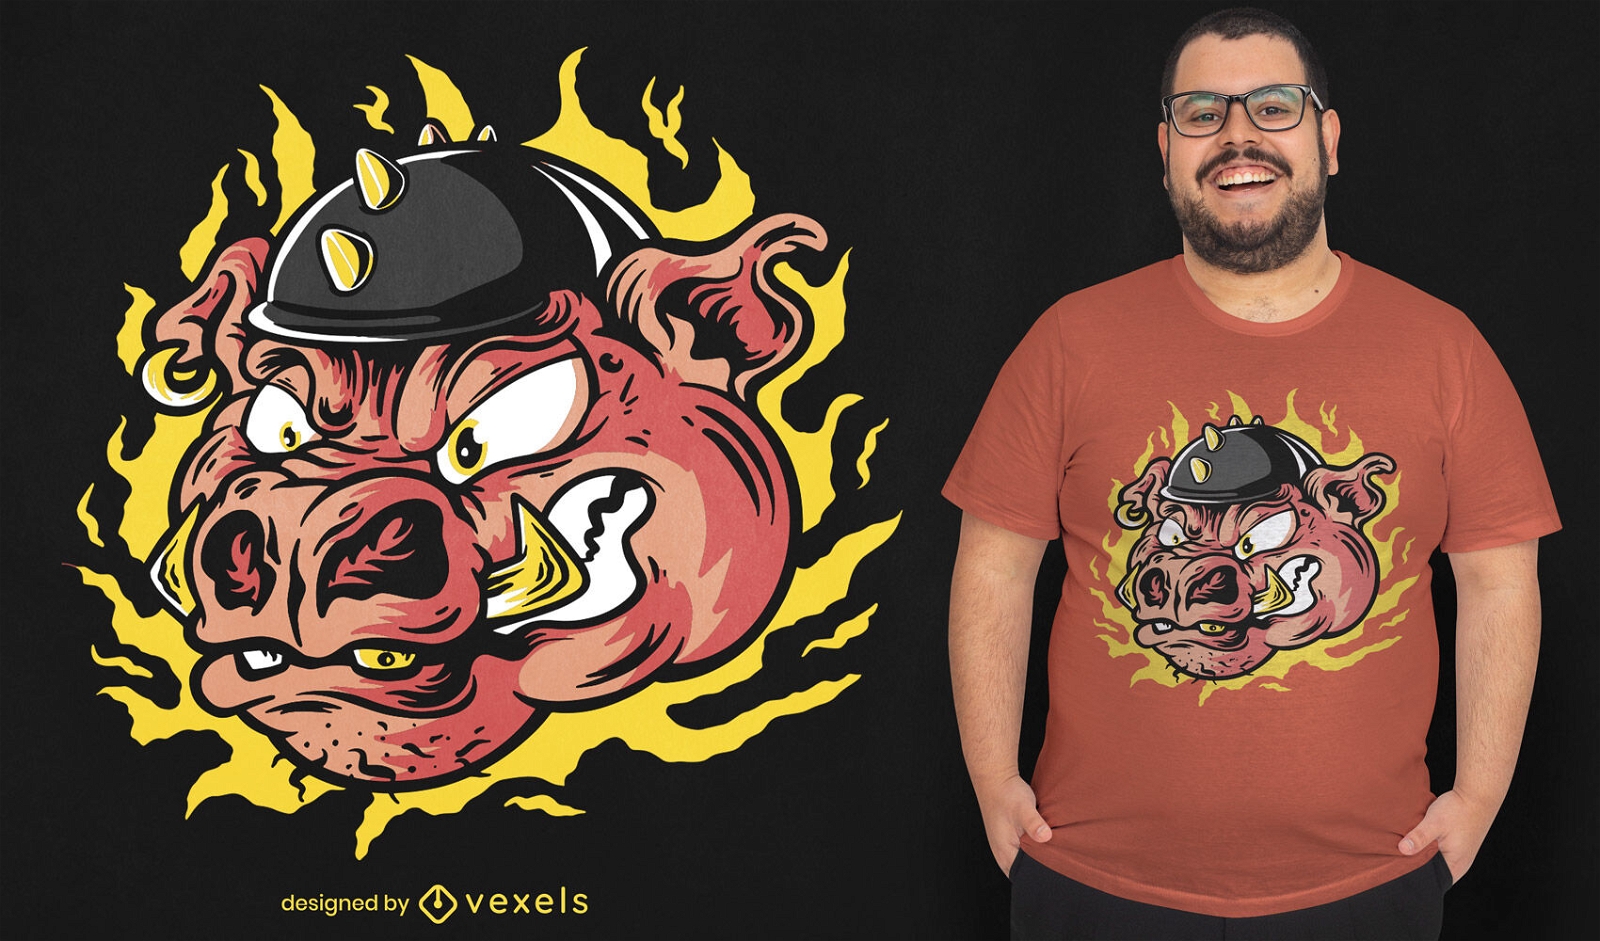 Pig head and flames t-shirt design